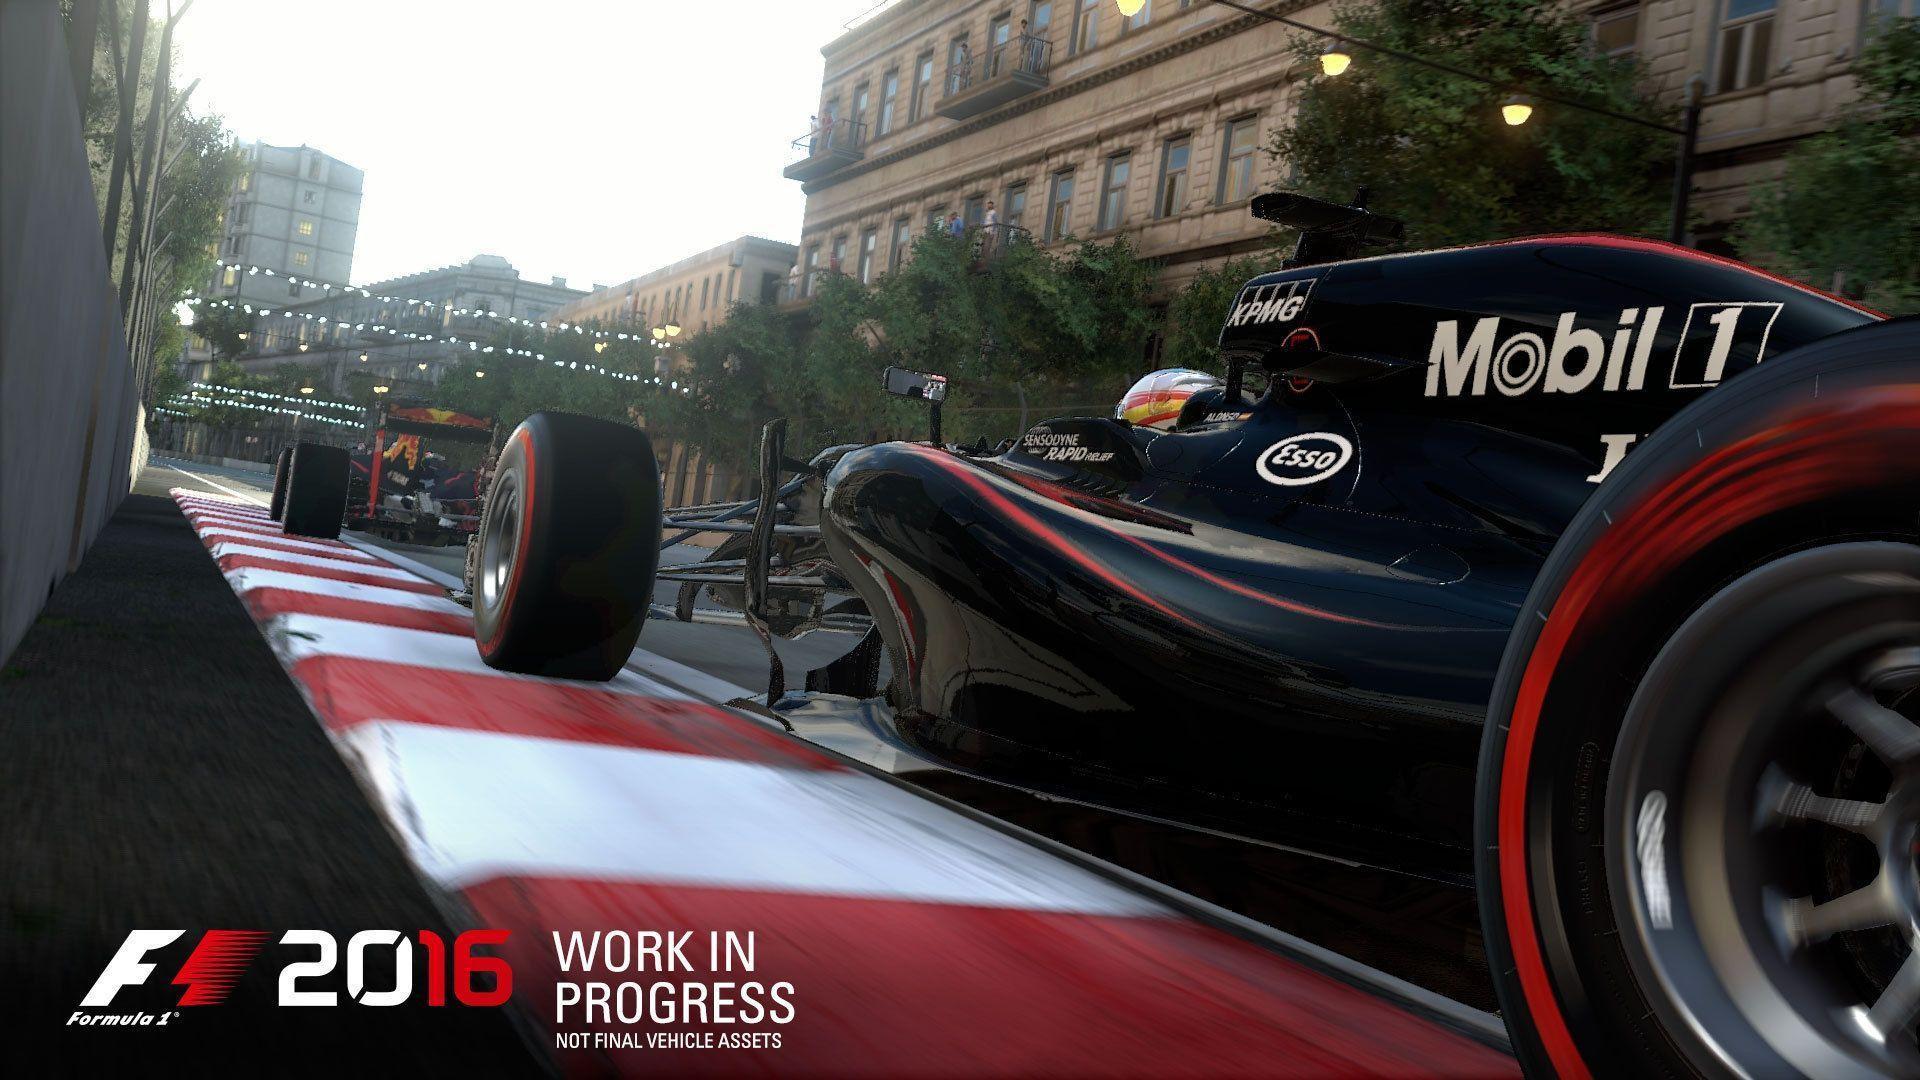 F1 Formula One 2016 Video Game Full HD Wallpaper